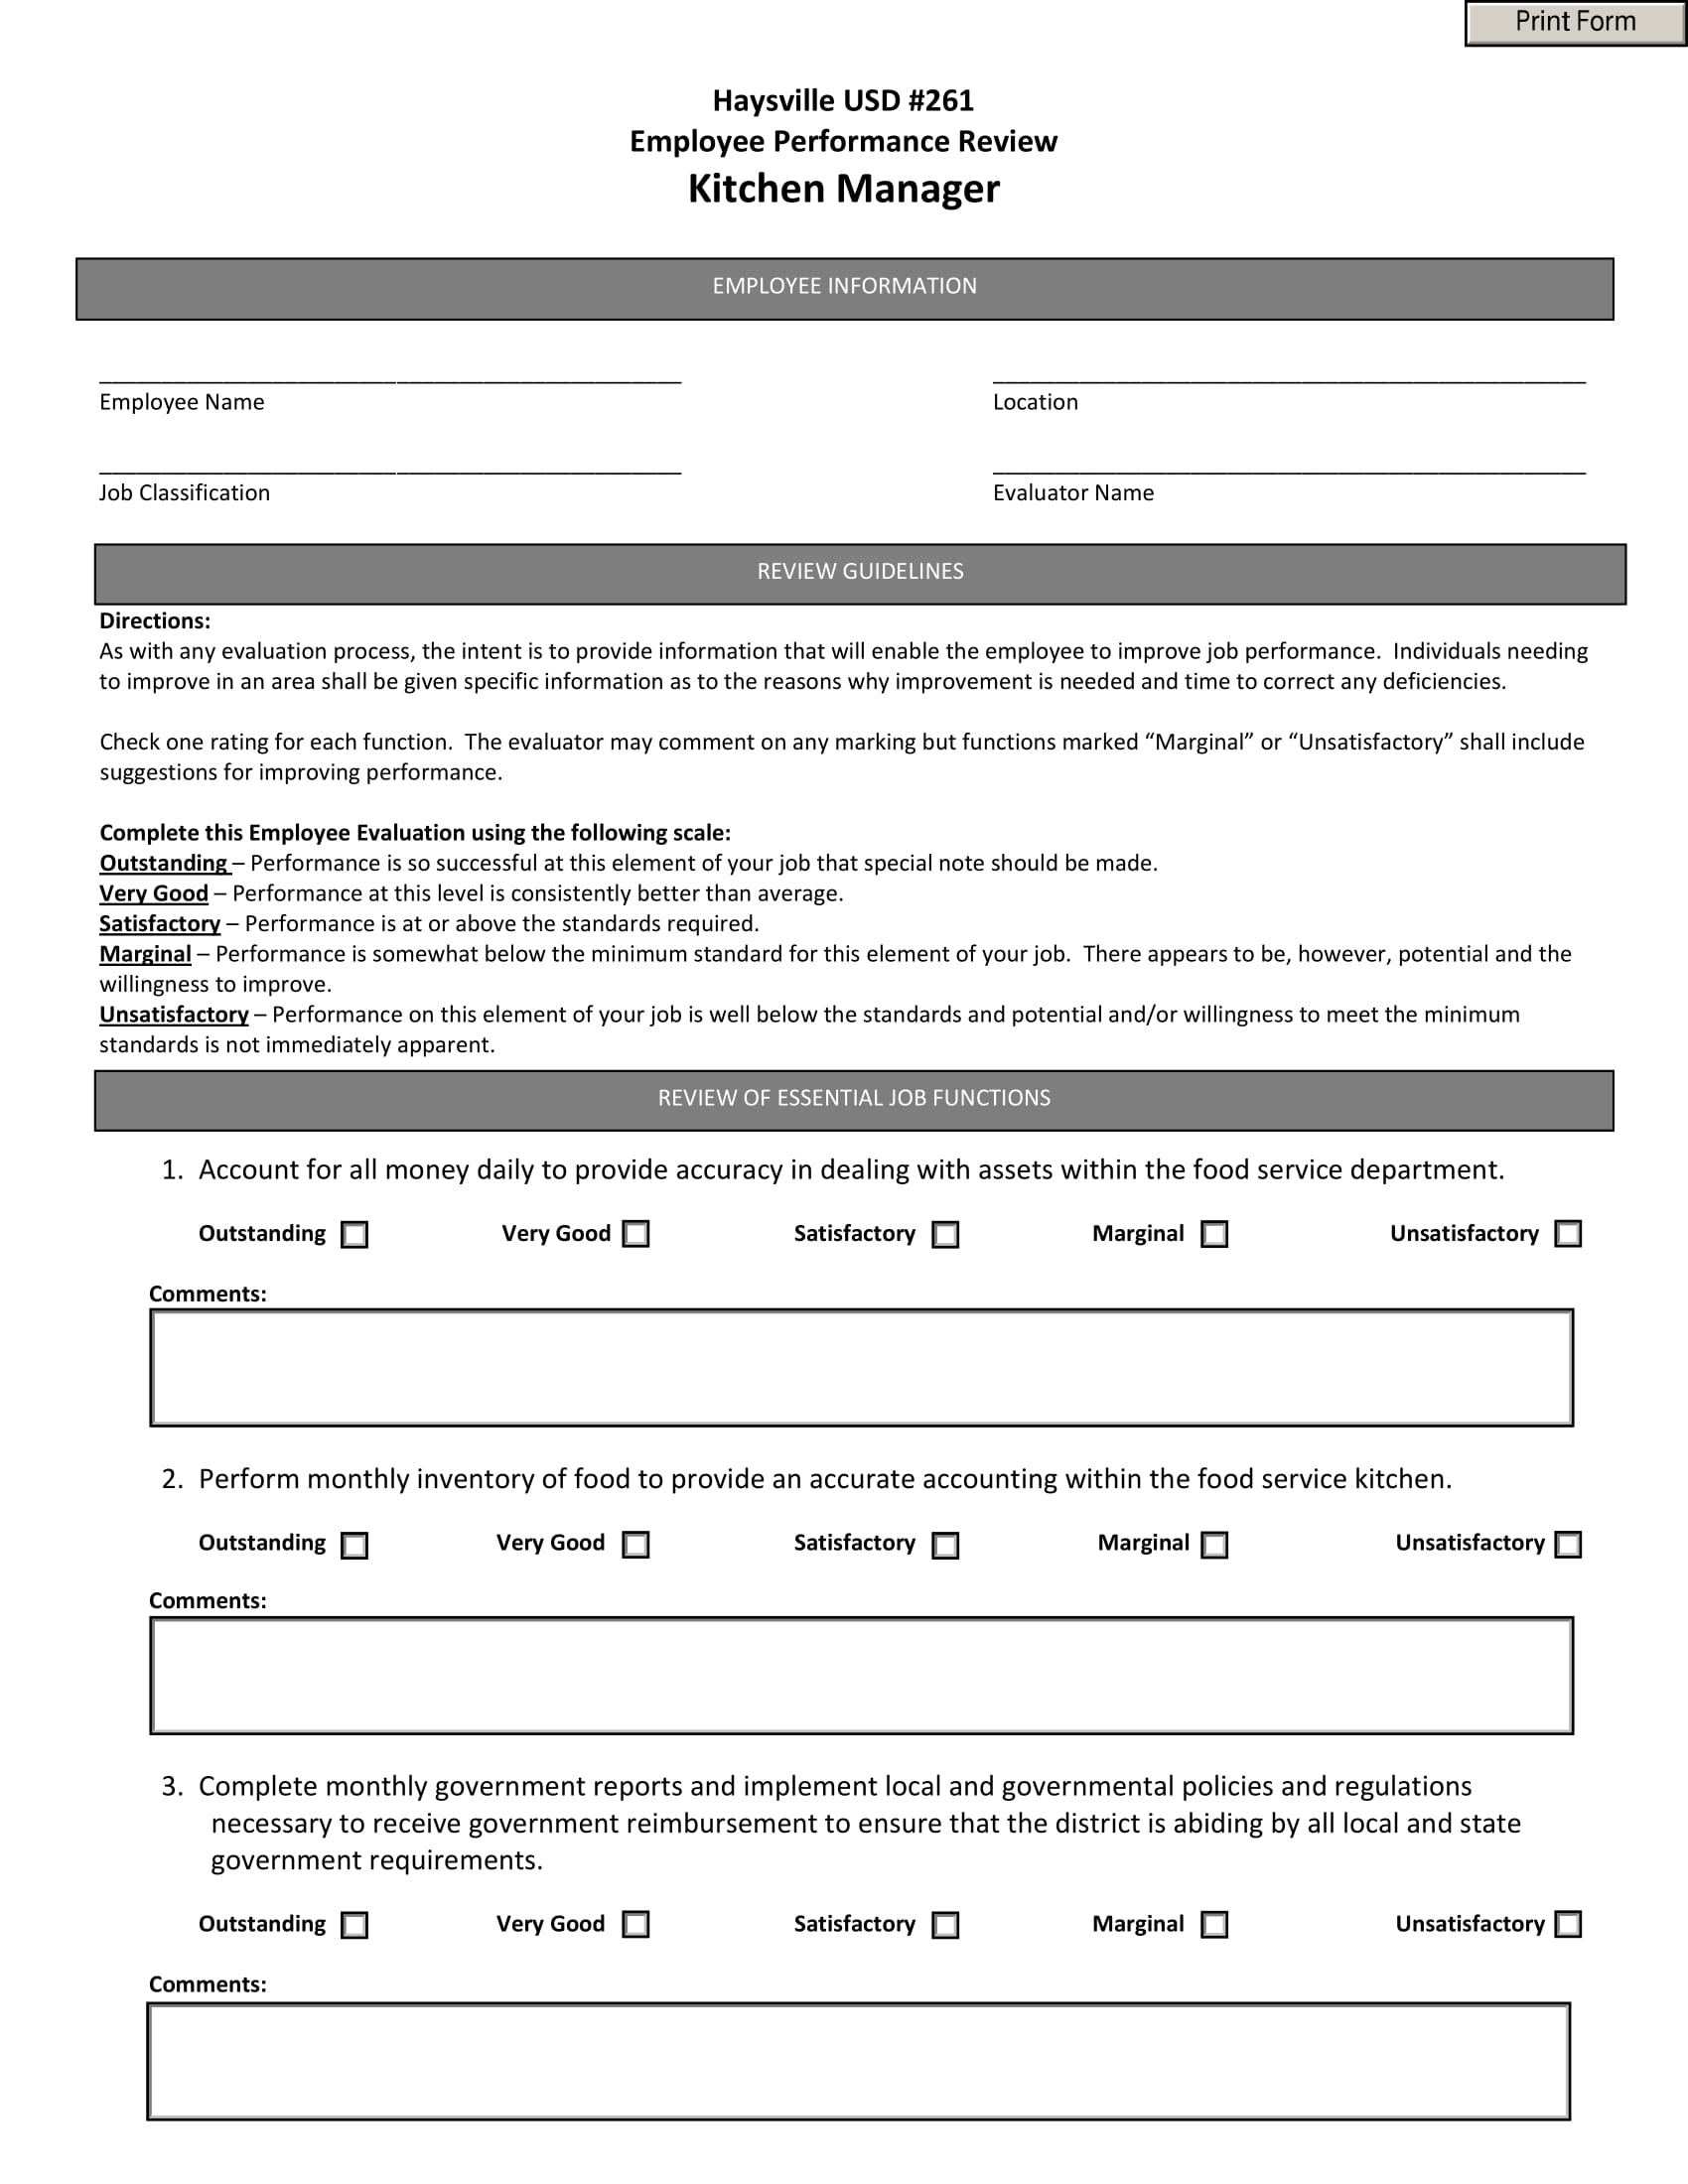 kitchen manager evaluation form 1